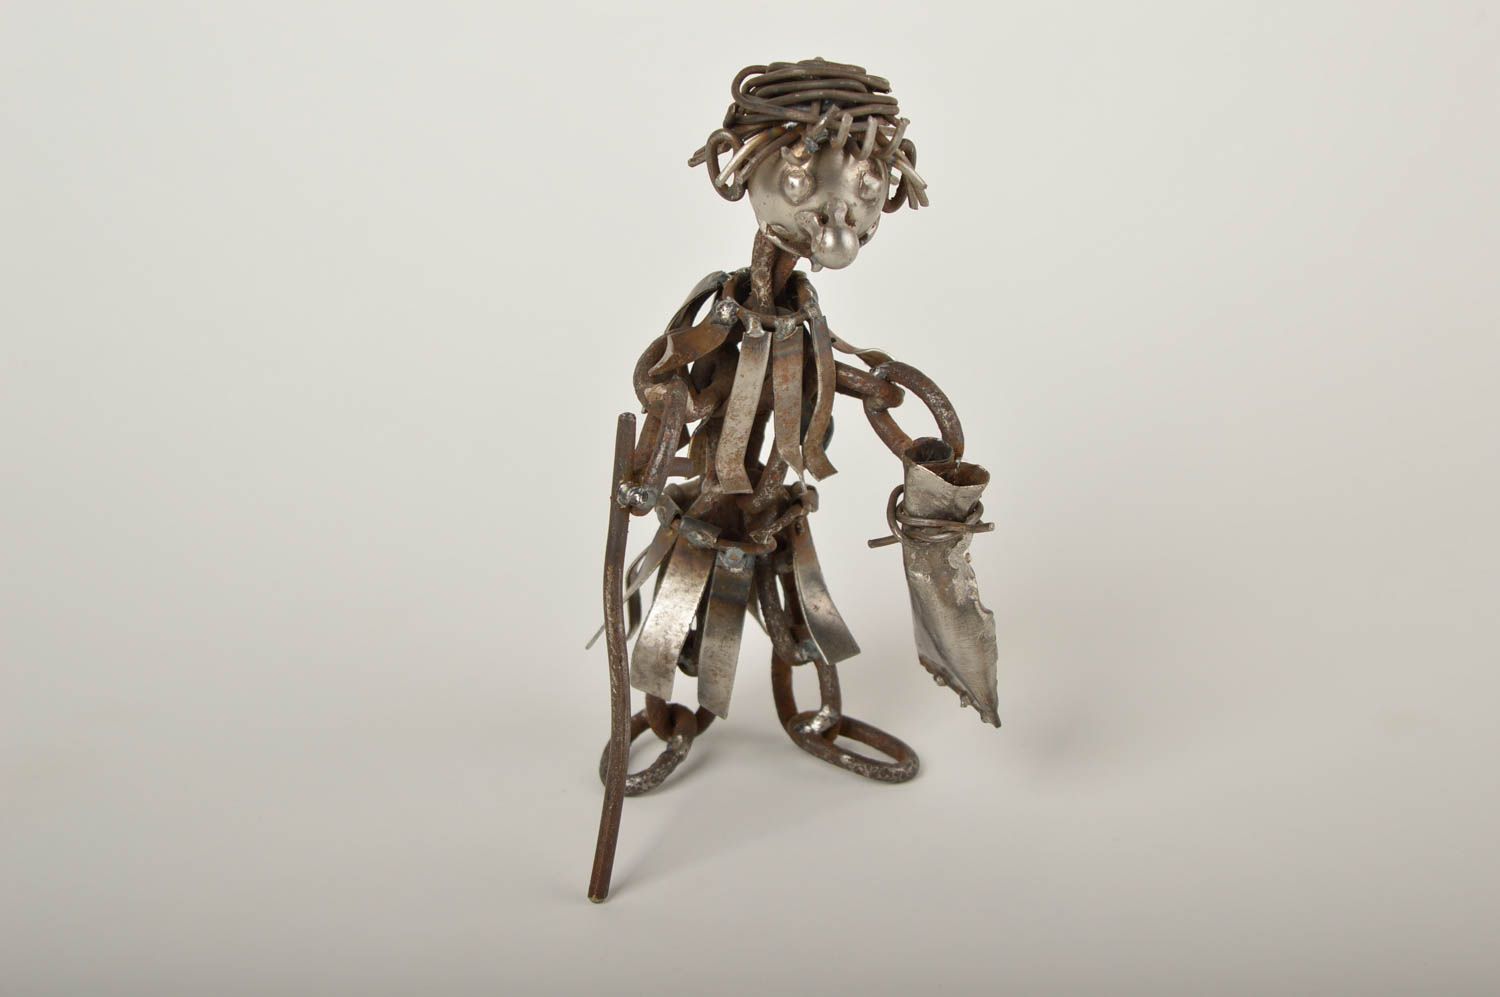 Handmade metal figurine metal art figurines of people for decorative use only photo 2